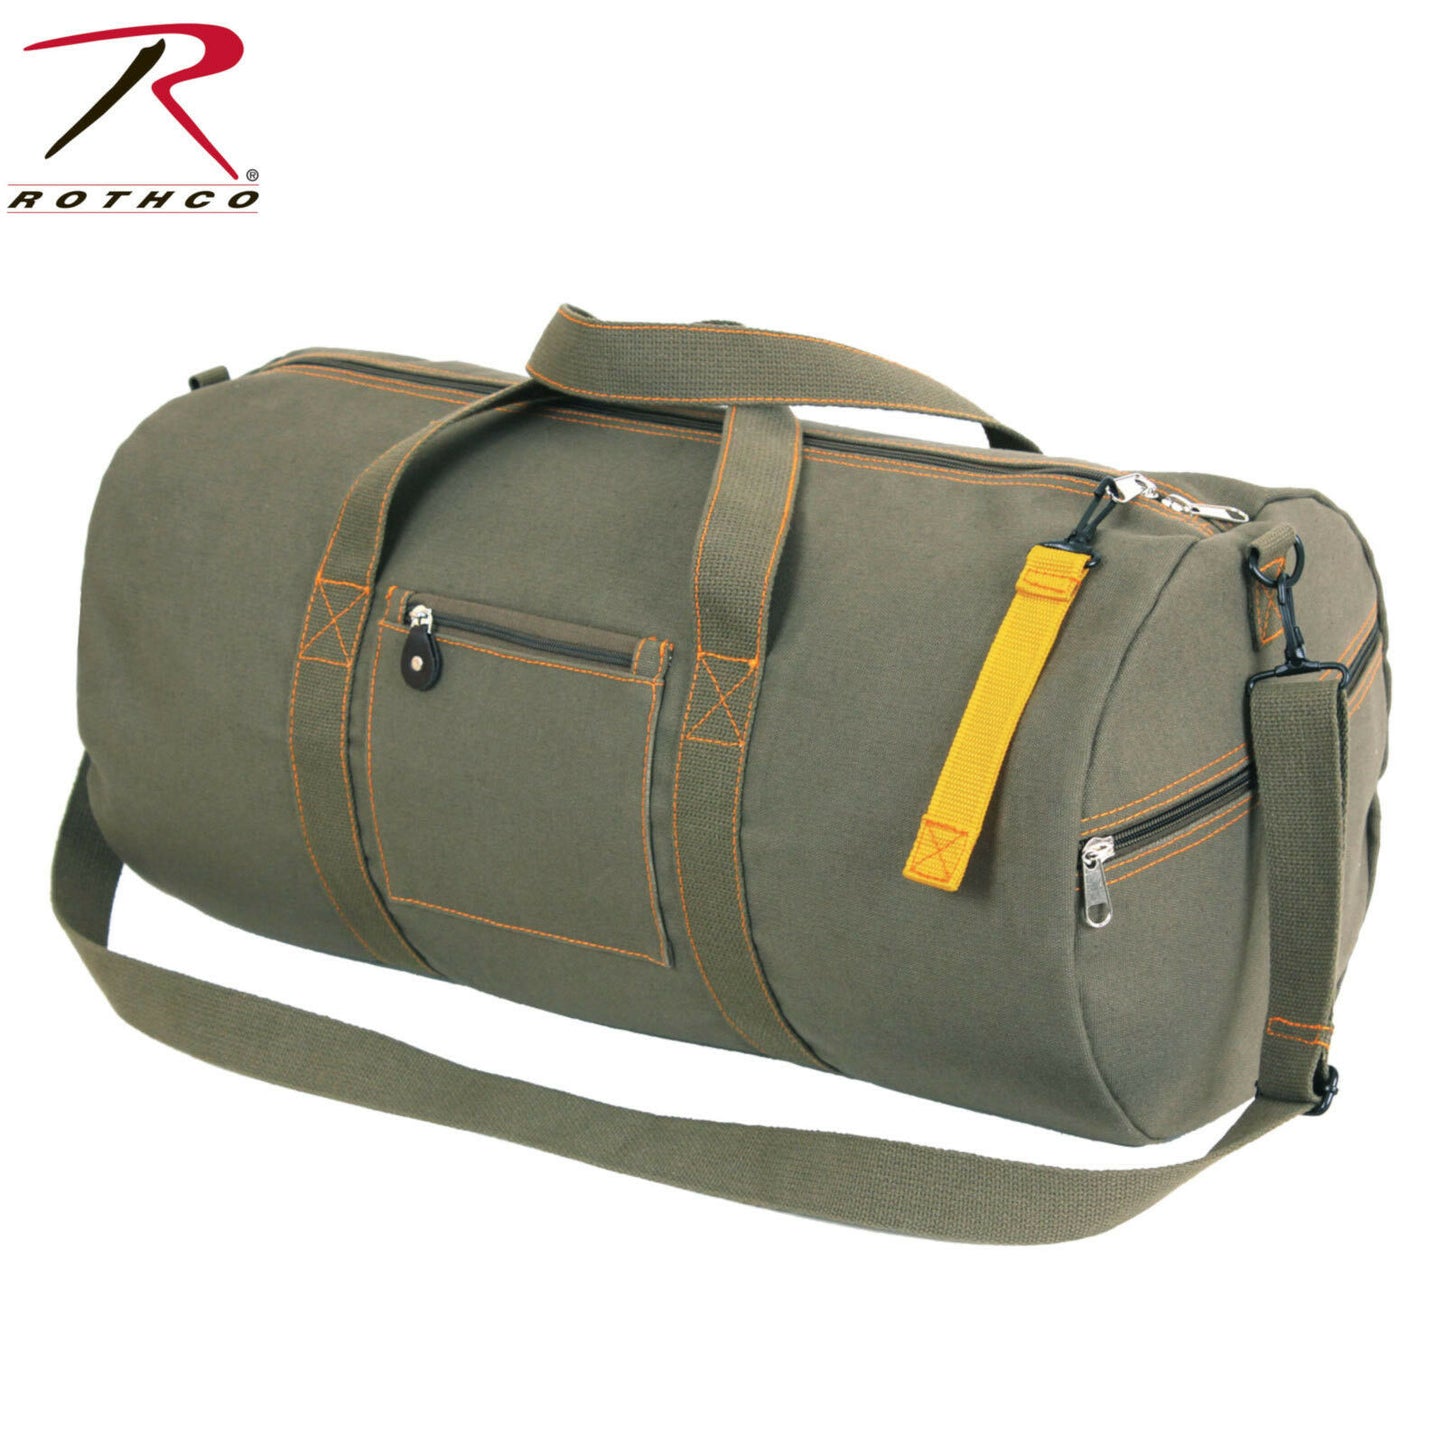 Rothco 24 Inch Canvas Equipment Bag - Olive Drab Shoulder Duffle Gear Bag